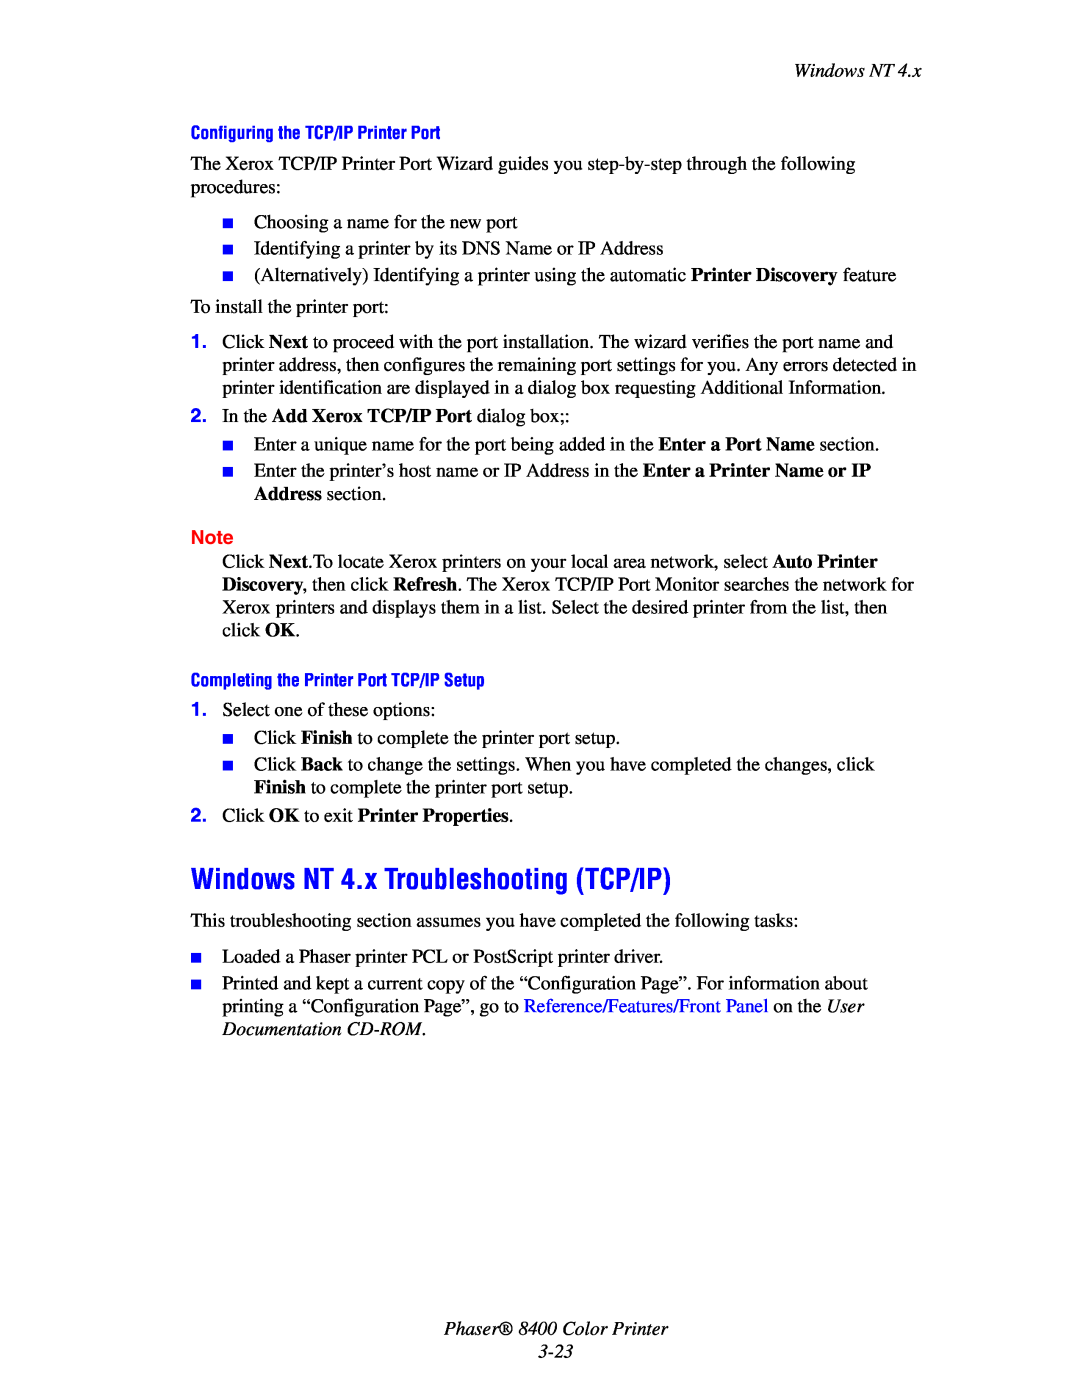 Xerox manual Windows NT 4.x Troubleshooting TCP/IP, In the Add Xerox TCP/IP Port dialog box, Phaser 8400 Color Printer 